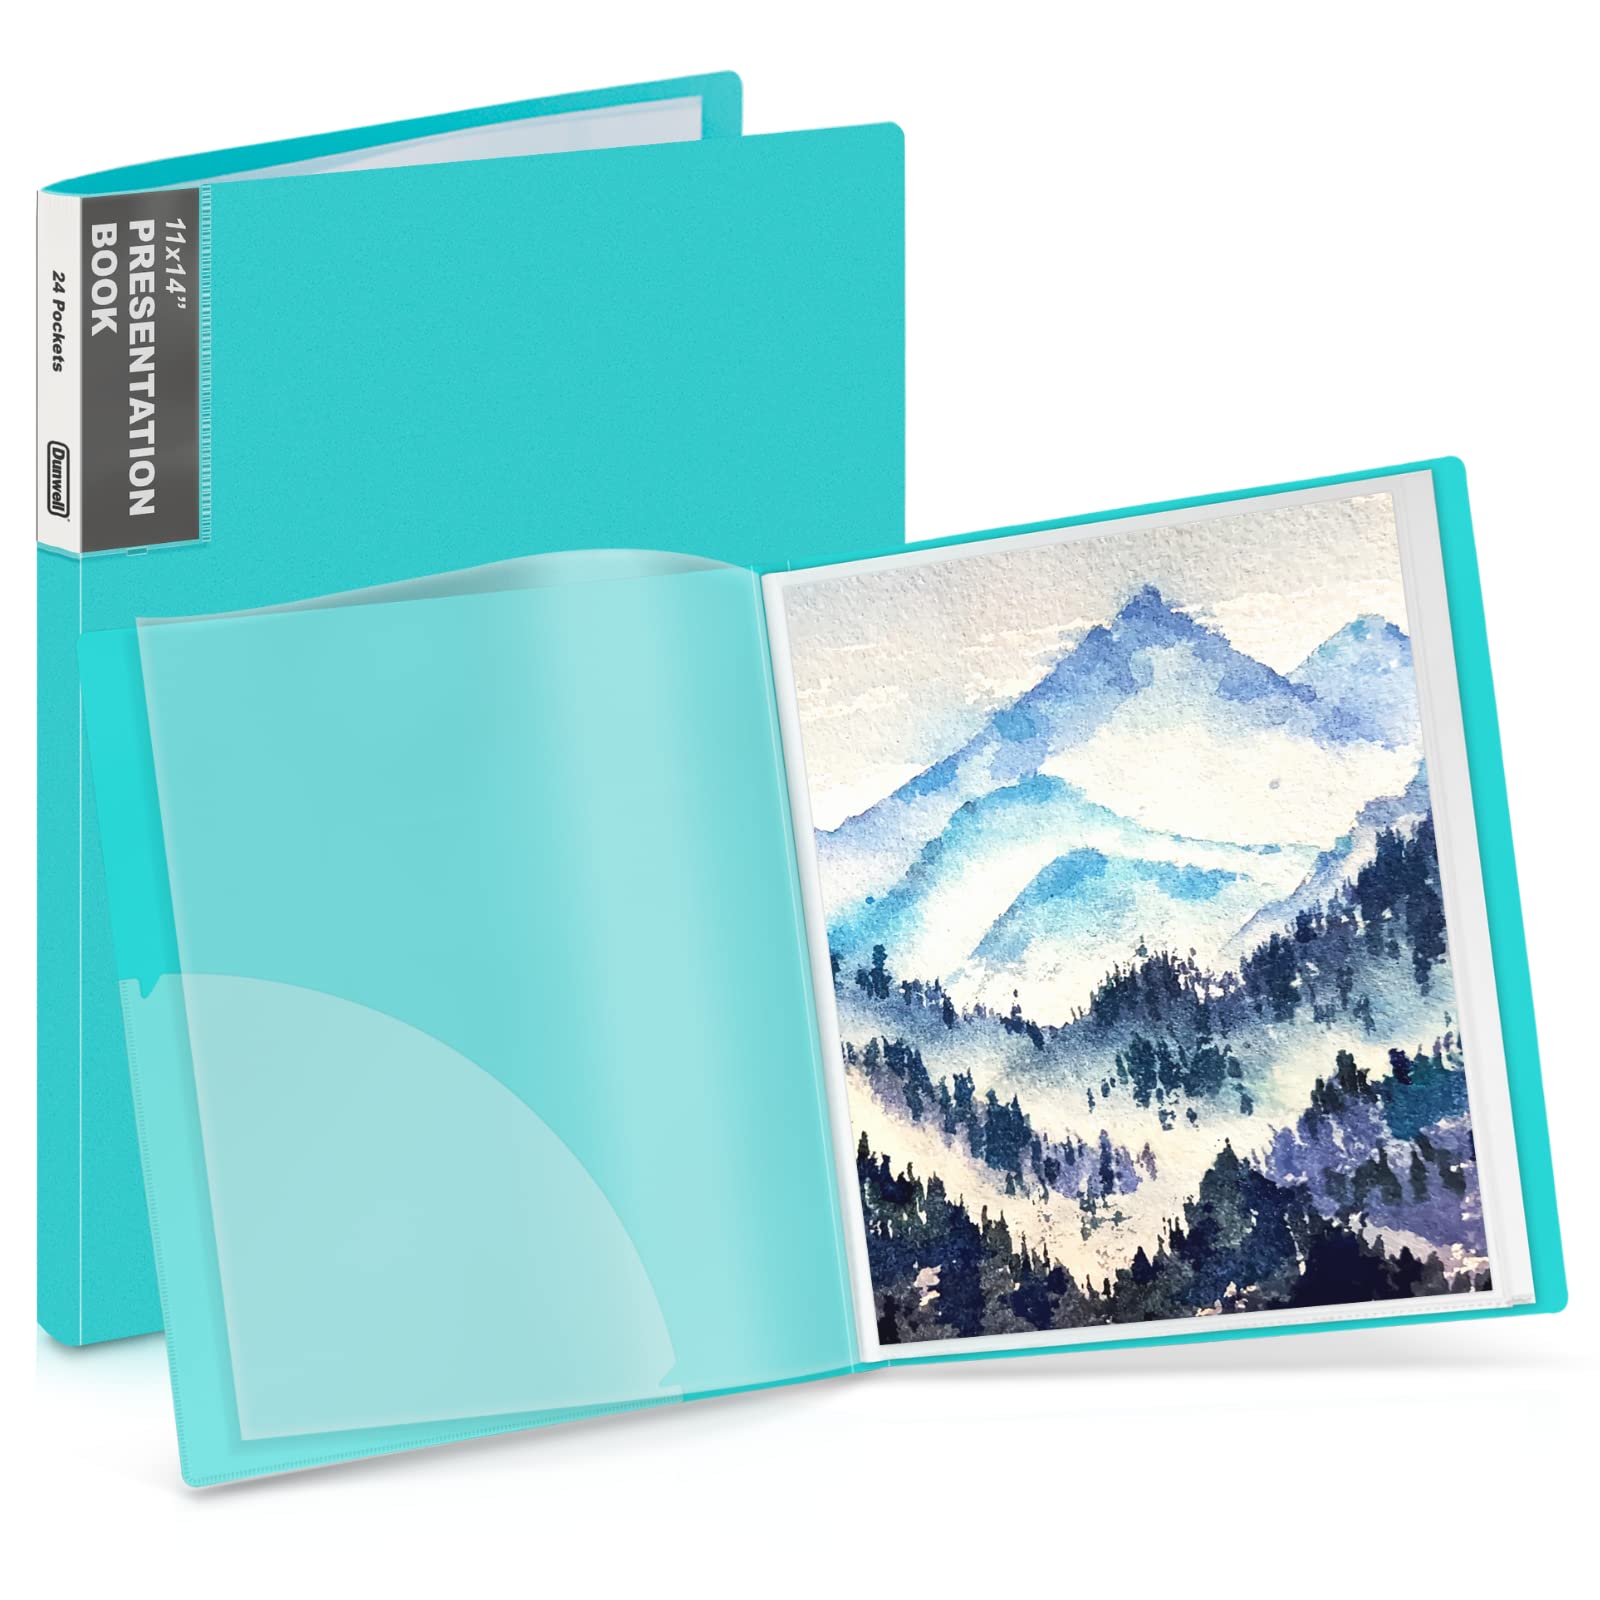 Dunwell Binder with Plastic Sleeves 48-Pocket (1 Pack, Black) - Presentation Book, 8.5 x 11 Portfolio Folder with Clear Sheet Protectors, Displays